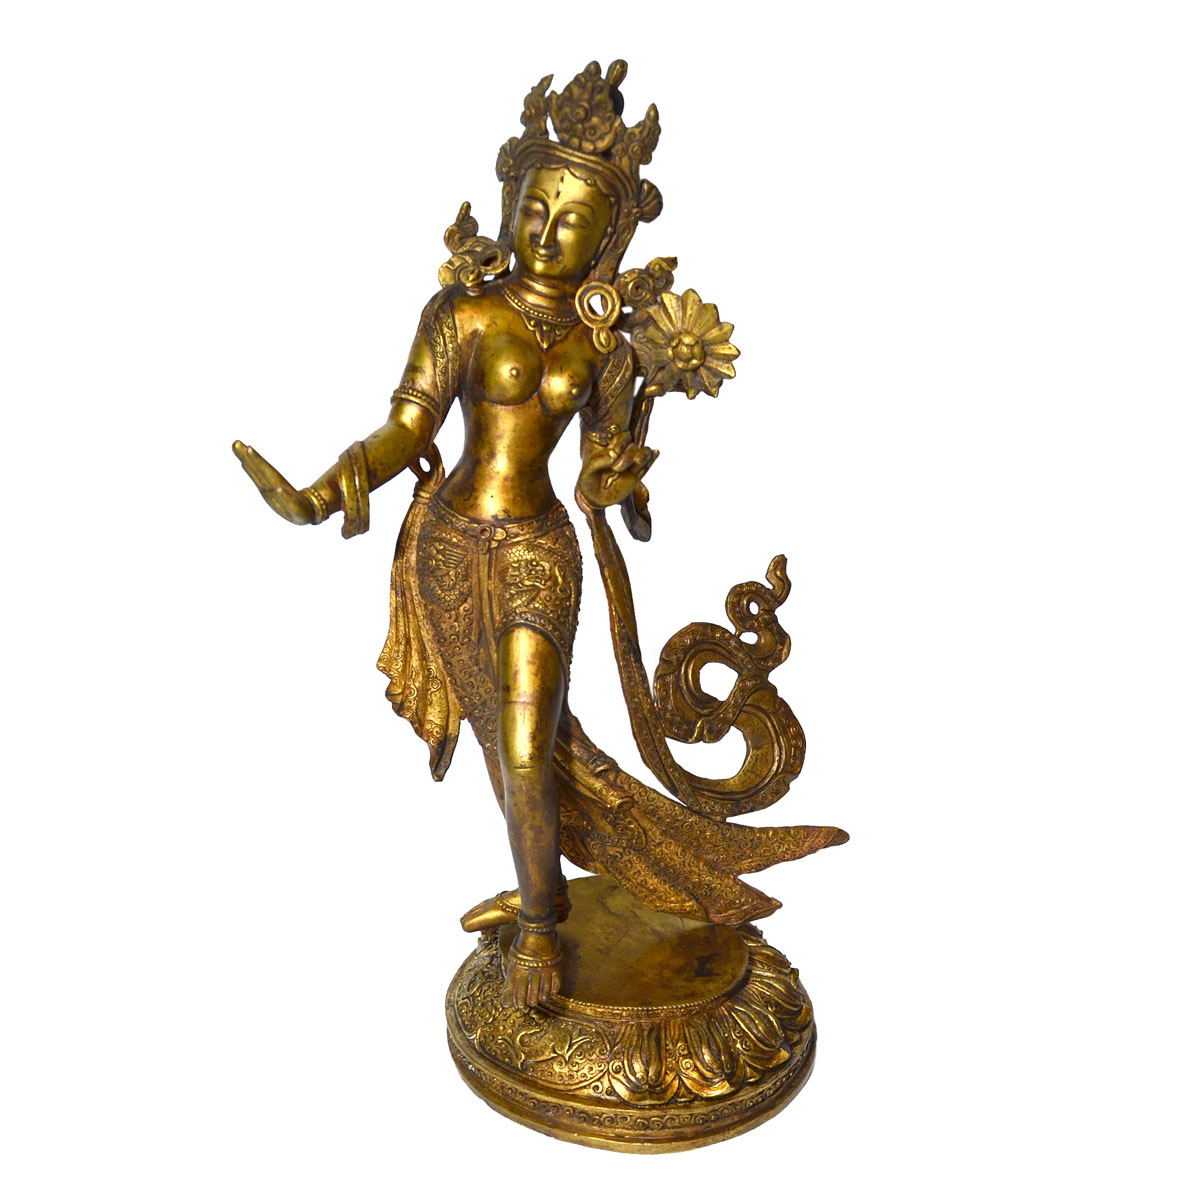 Tara, the Bodhisattva’s feminine counterpart.